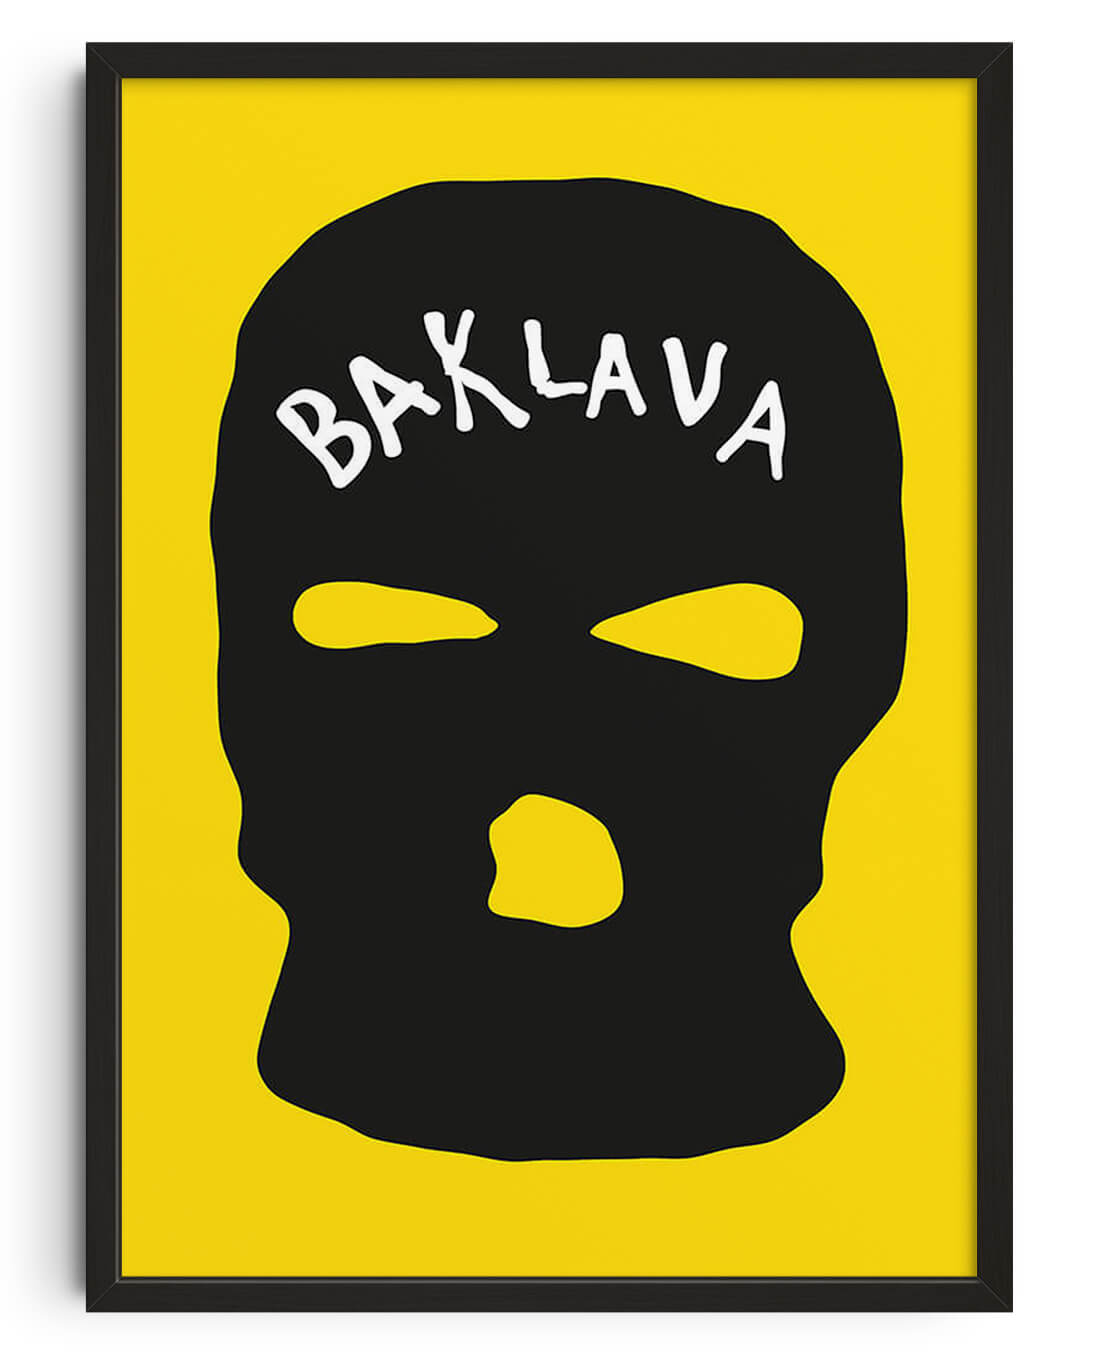 Baklava by Max Blackmore contemporary wall art print from DROOL